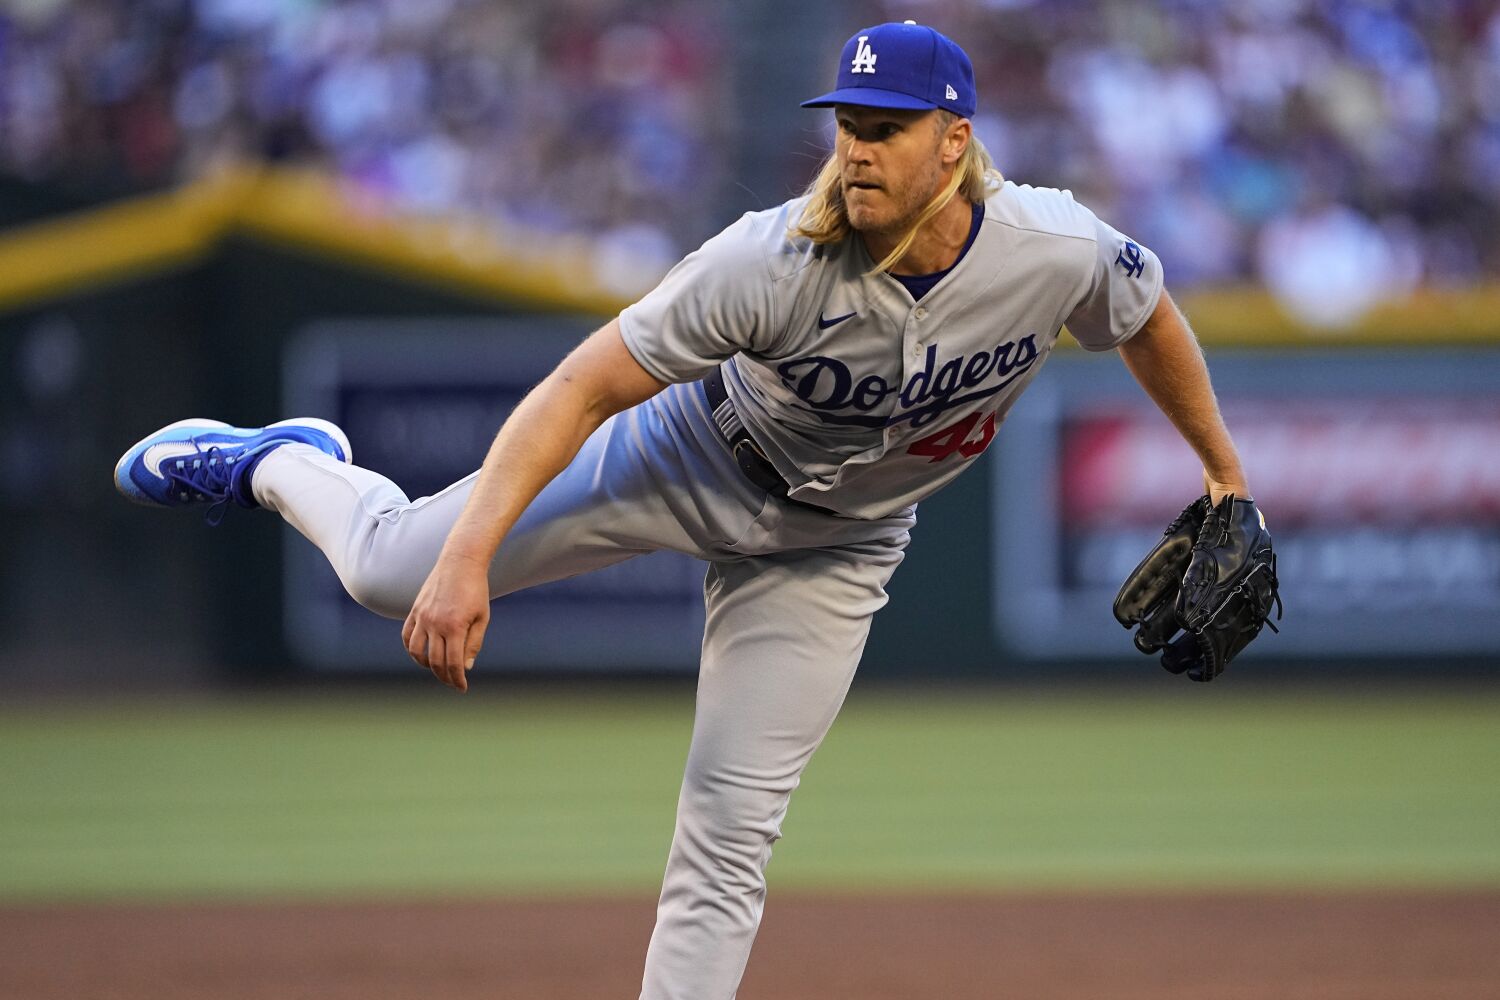 Hypnosis and mental hurdles: Dodgers' Noah Syndergaard seeks answers amid poor start